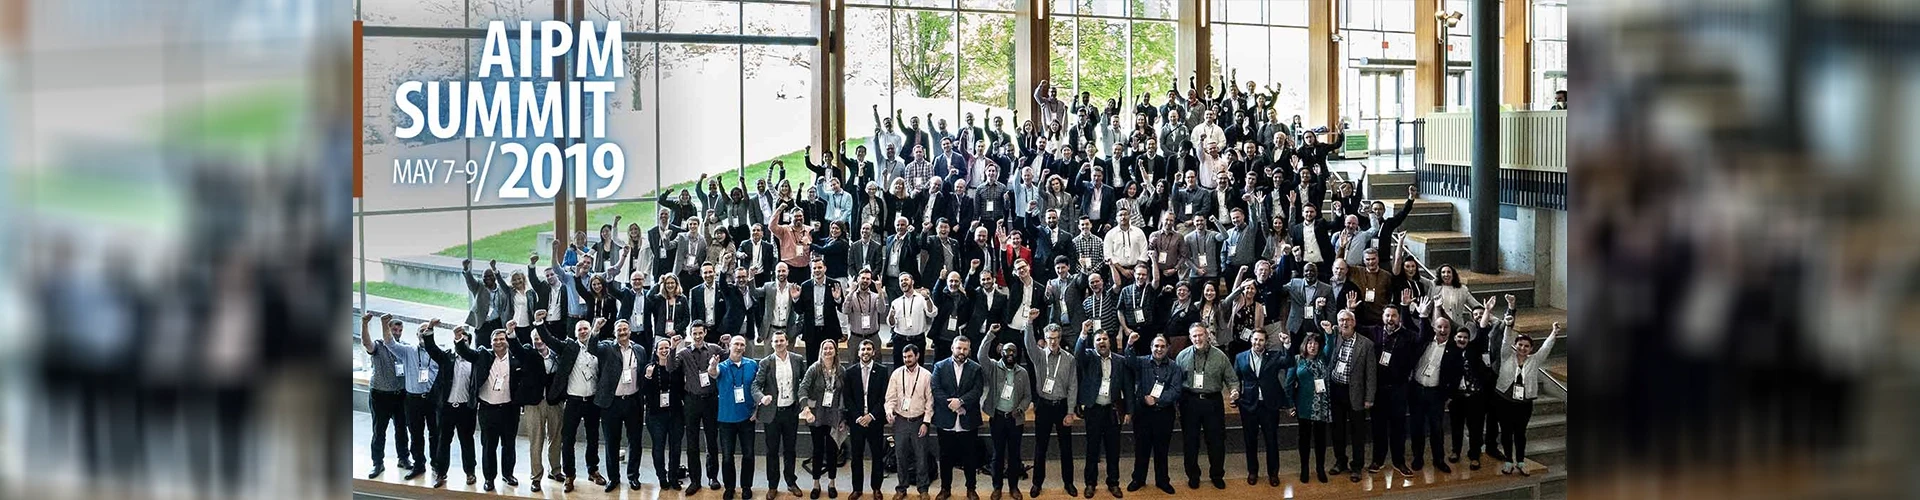 Blog Hero 2019 Copperleaf AIPM Summit - Copperleaf Decision Analytics